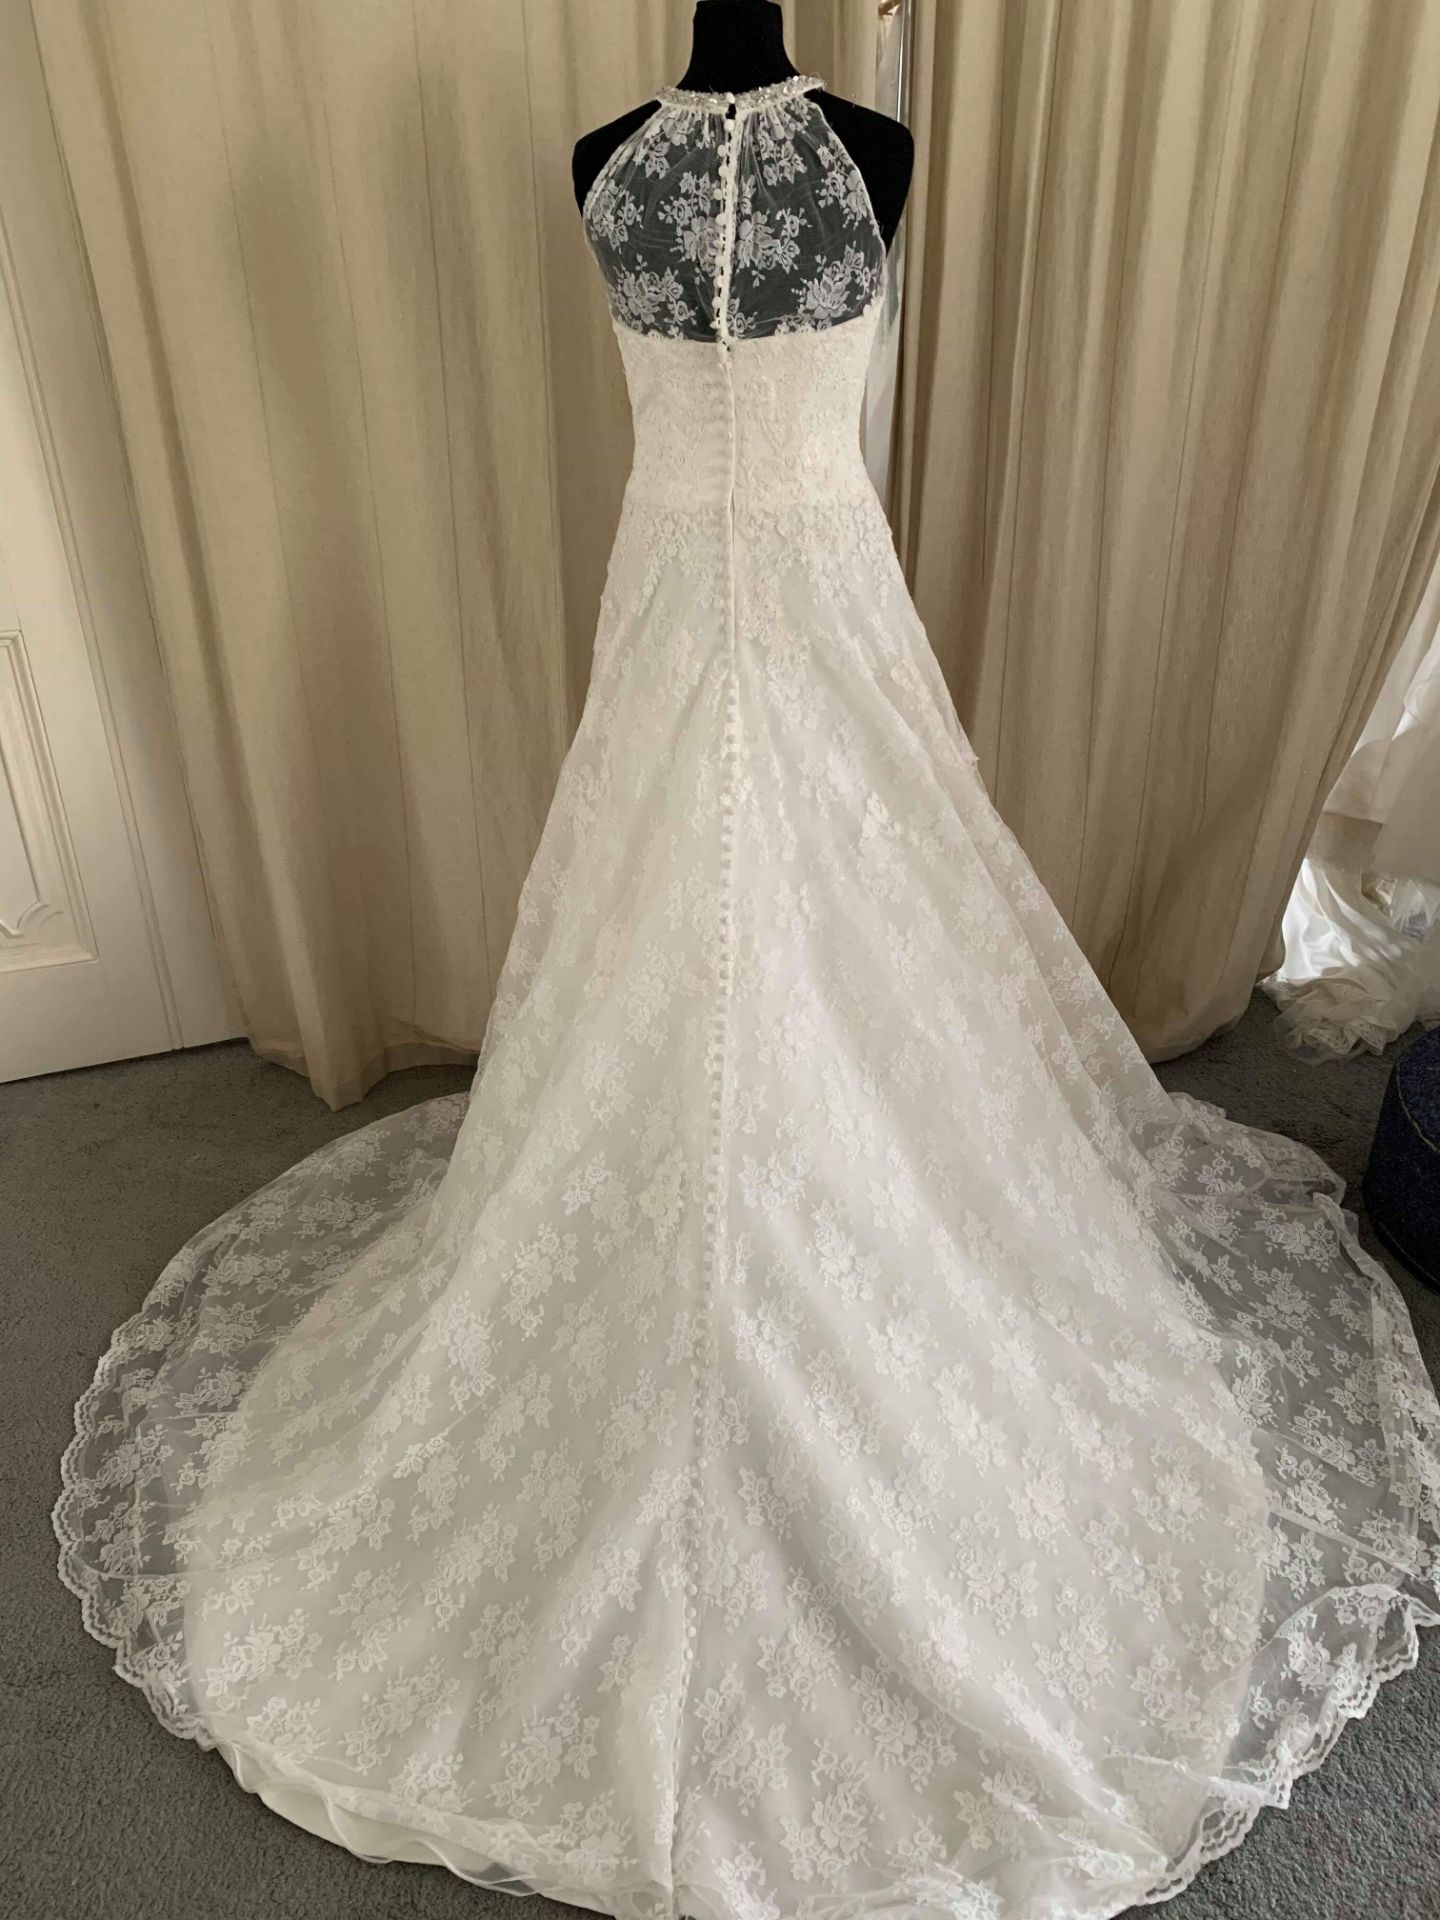 Veromia Bridal Halter Neck Wedding Dress. £1,495 RRP. Approx. Size 12. Ivory